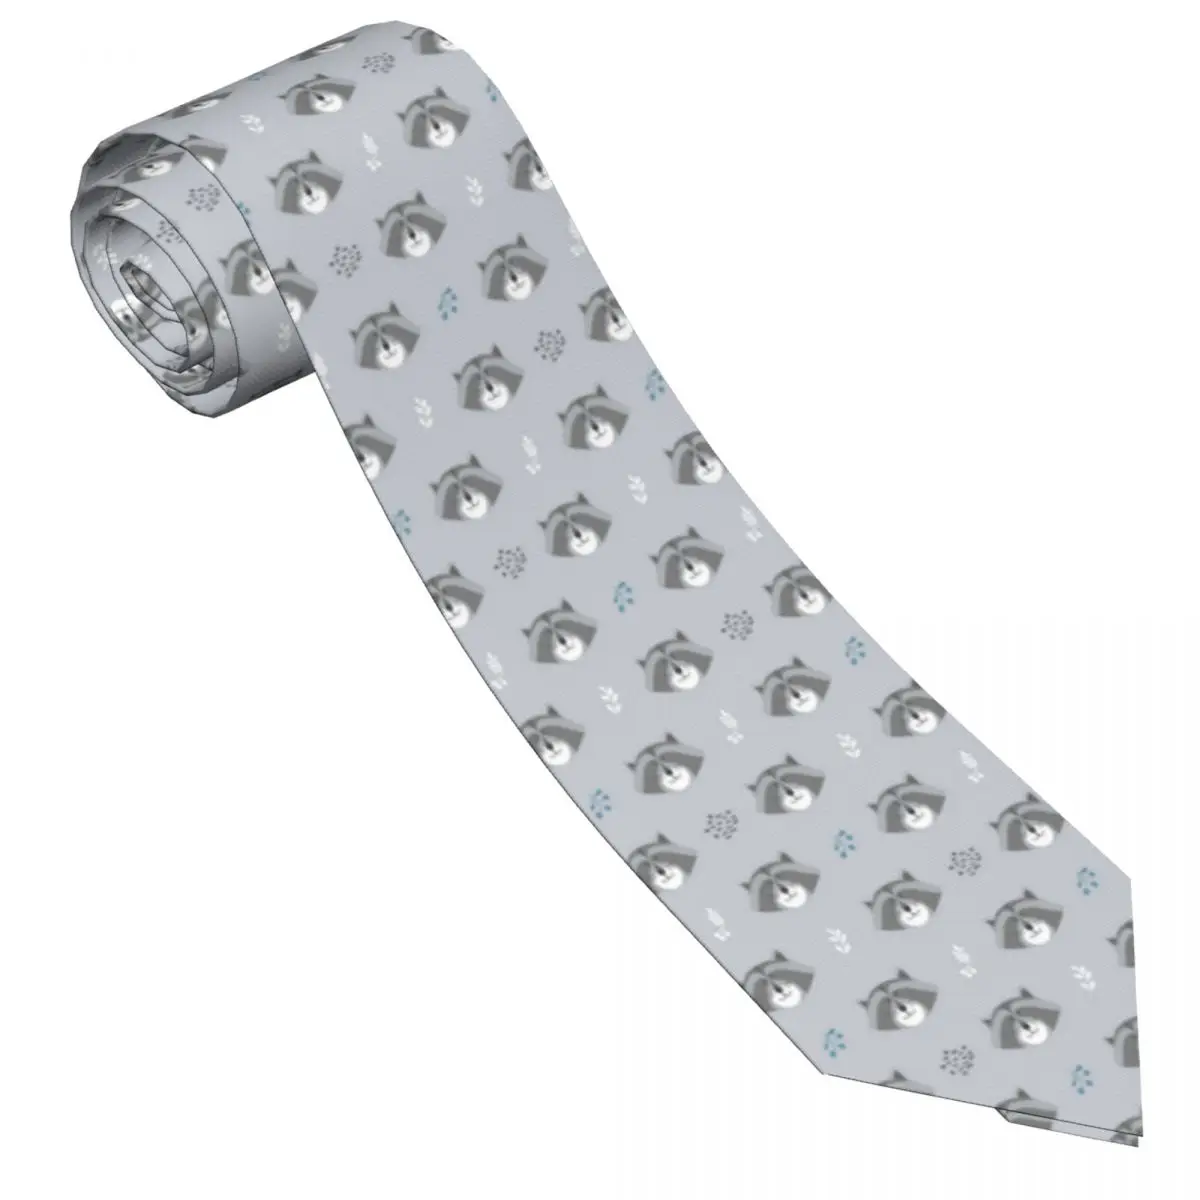 Corbata clásica de cabeza de mapache para hombre, corbatas ajustadas, cuello estrecho, corbata informal, accesorios para regalo